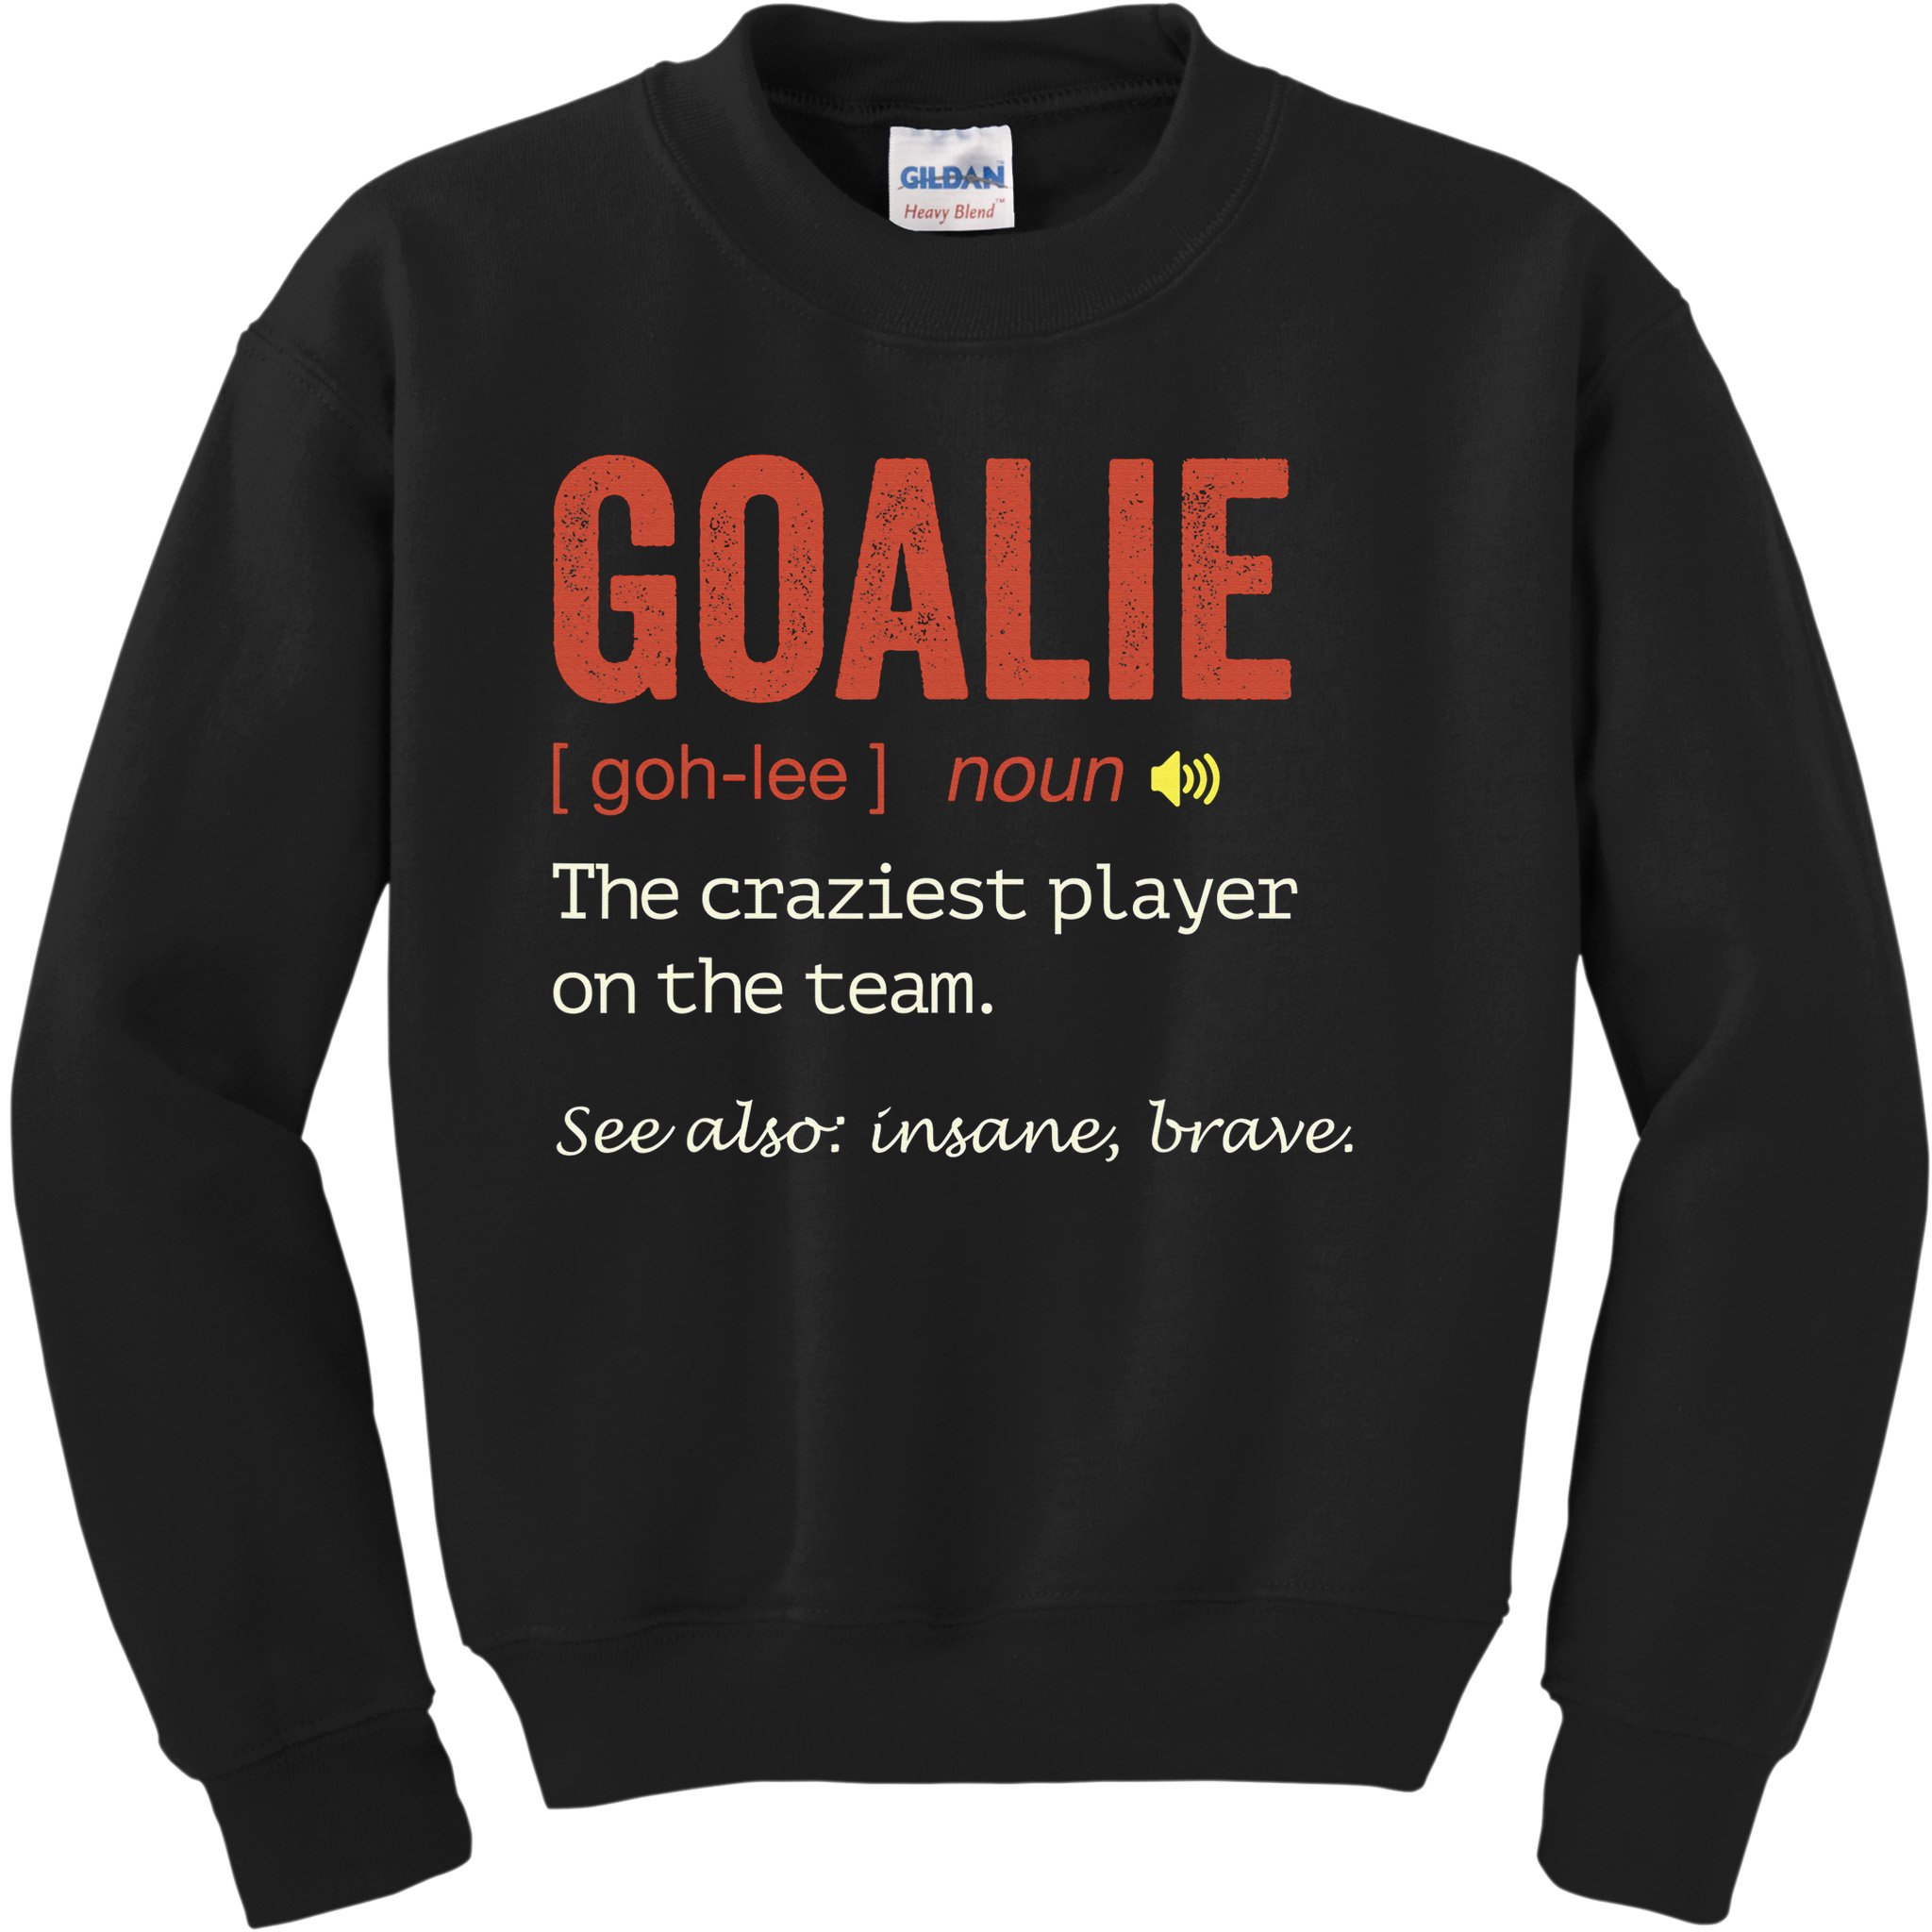 Hockey Goalie Jersey for sale